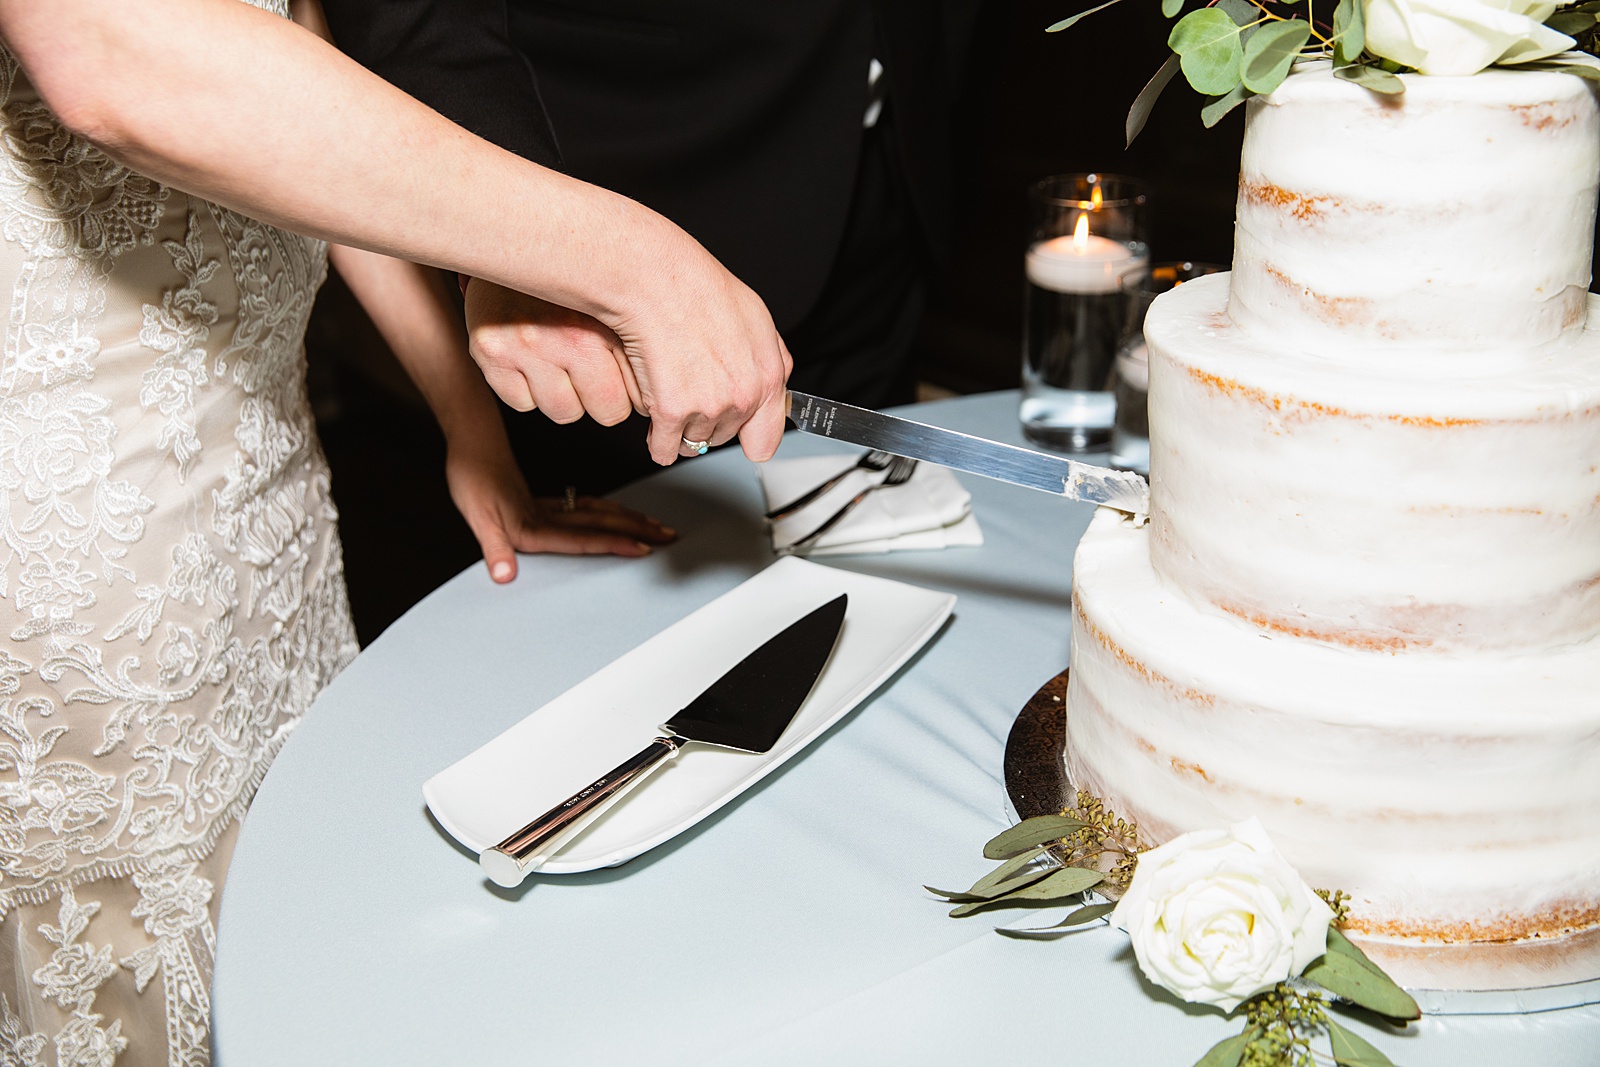 Newlyweds cutting their wedding cake at their Troon North wedding reception by Arizona wedding photographer PMA Photography.